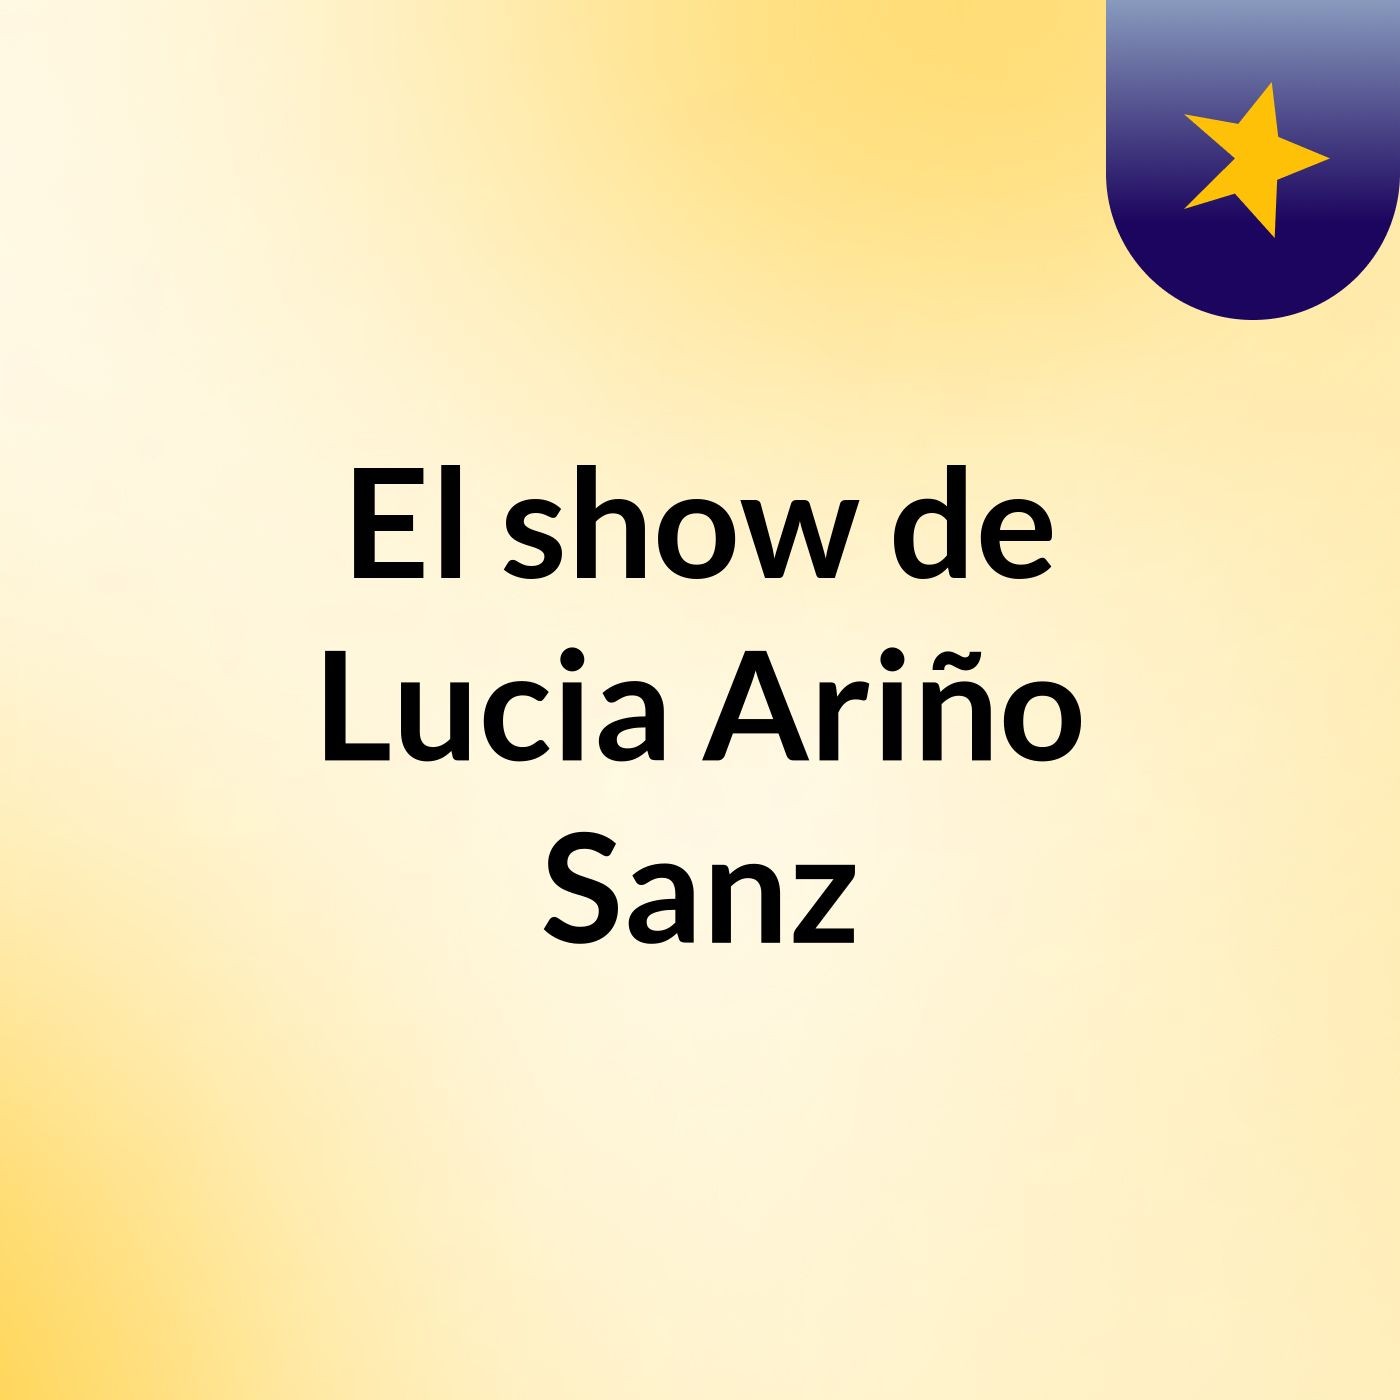 El show de Lucia Ariño Sanz